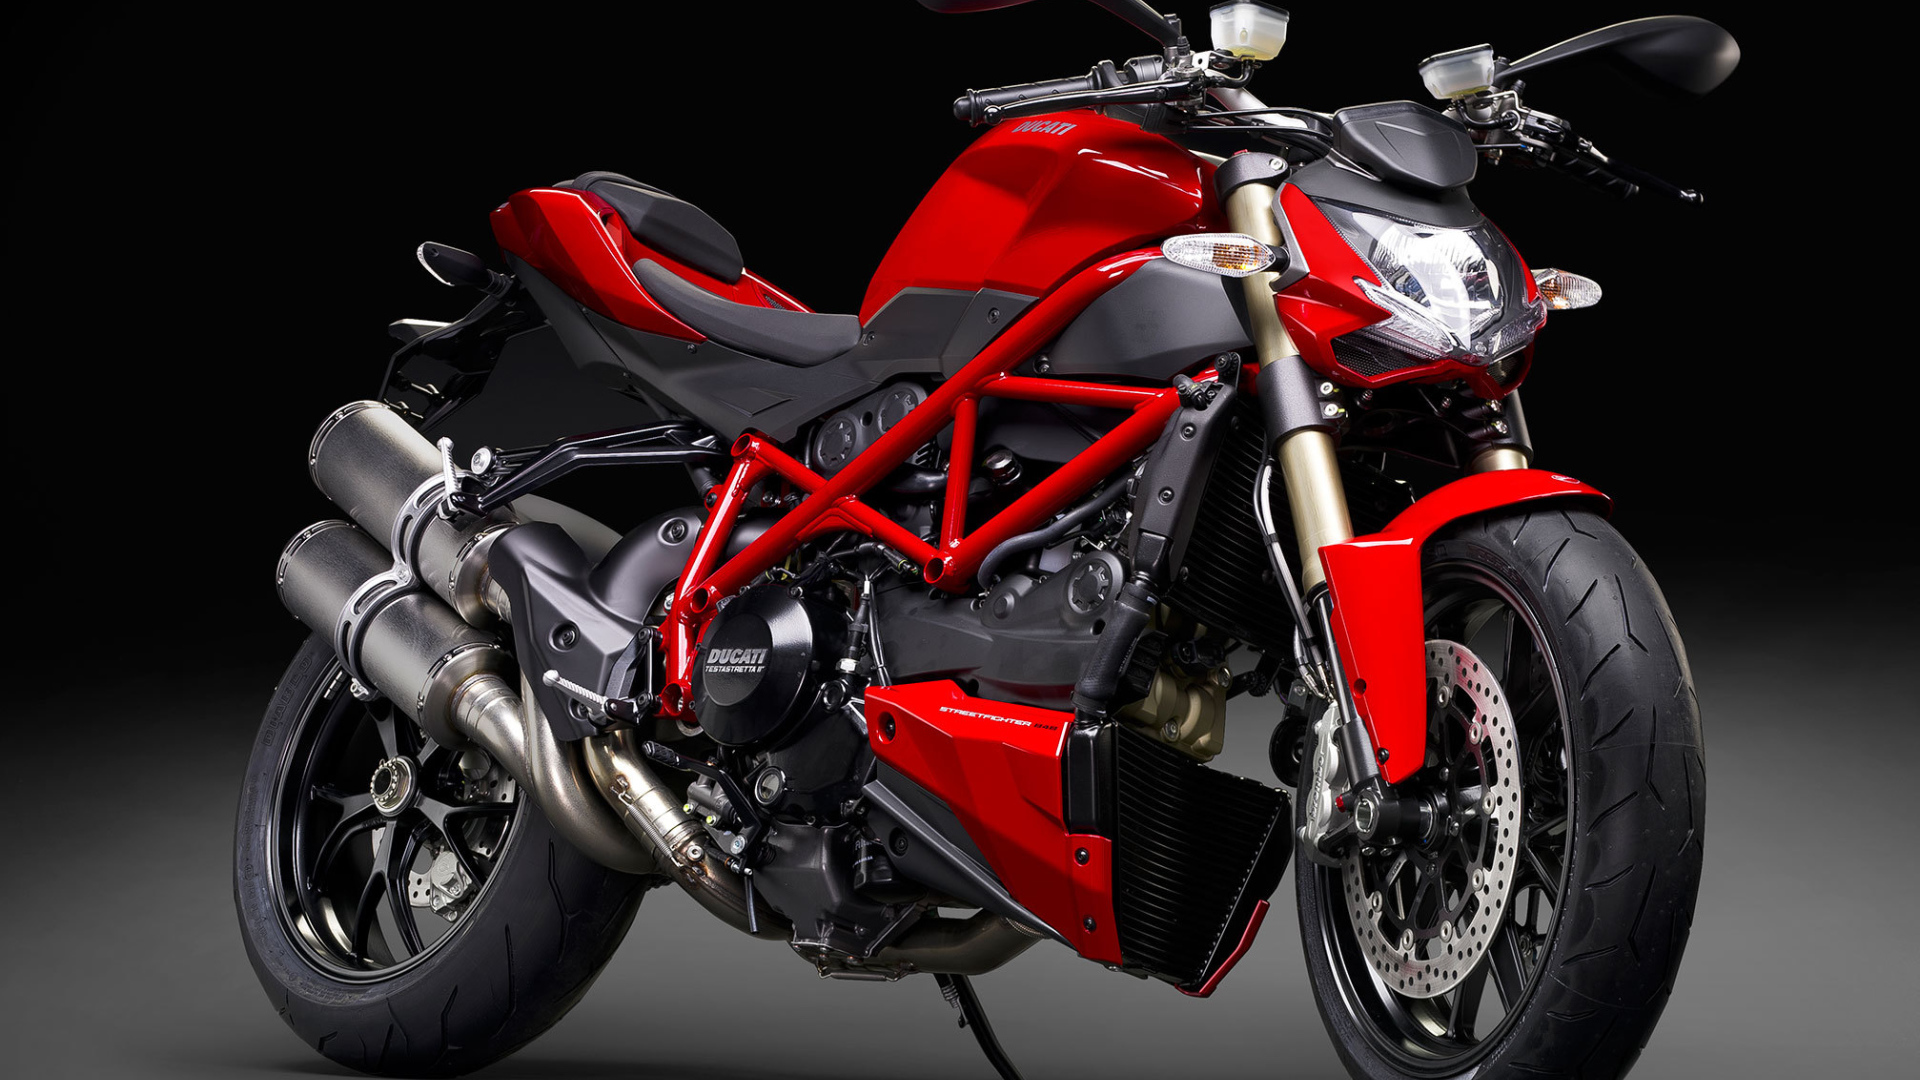 Тест-драйв мотоцикла Ducati Streetfighter 848